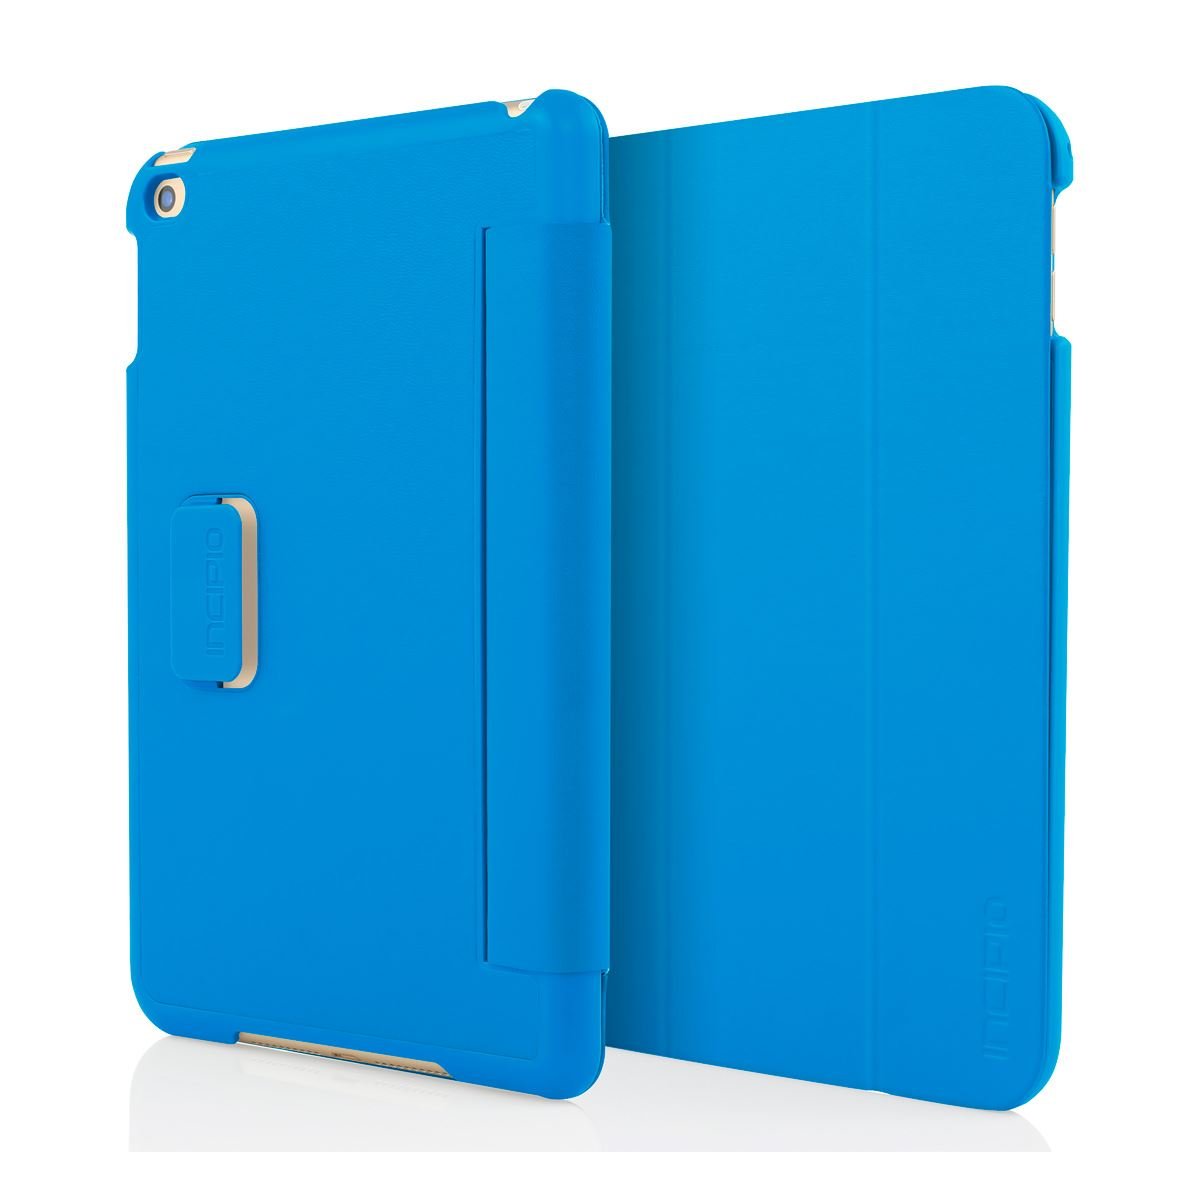 Funda Incipio Tuxen Folio iPad mini 4 Azul Cierre Magnético